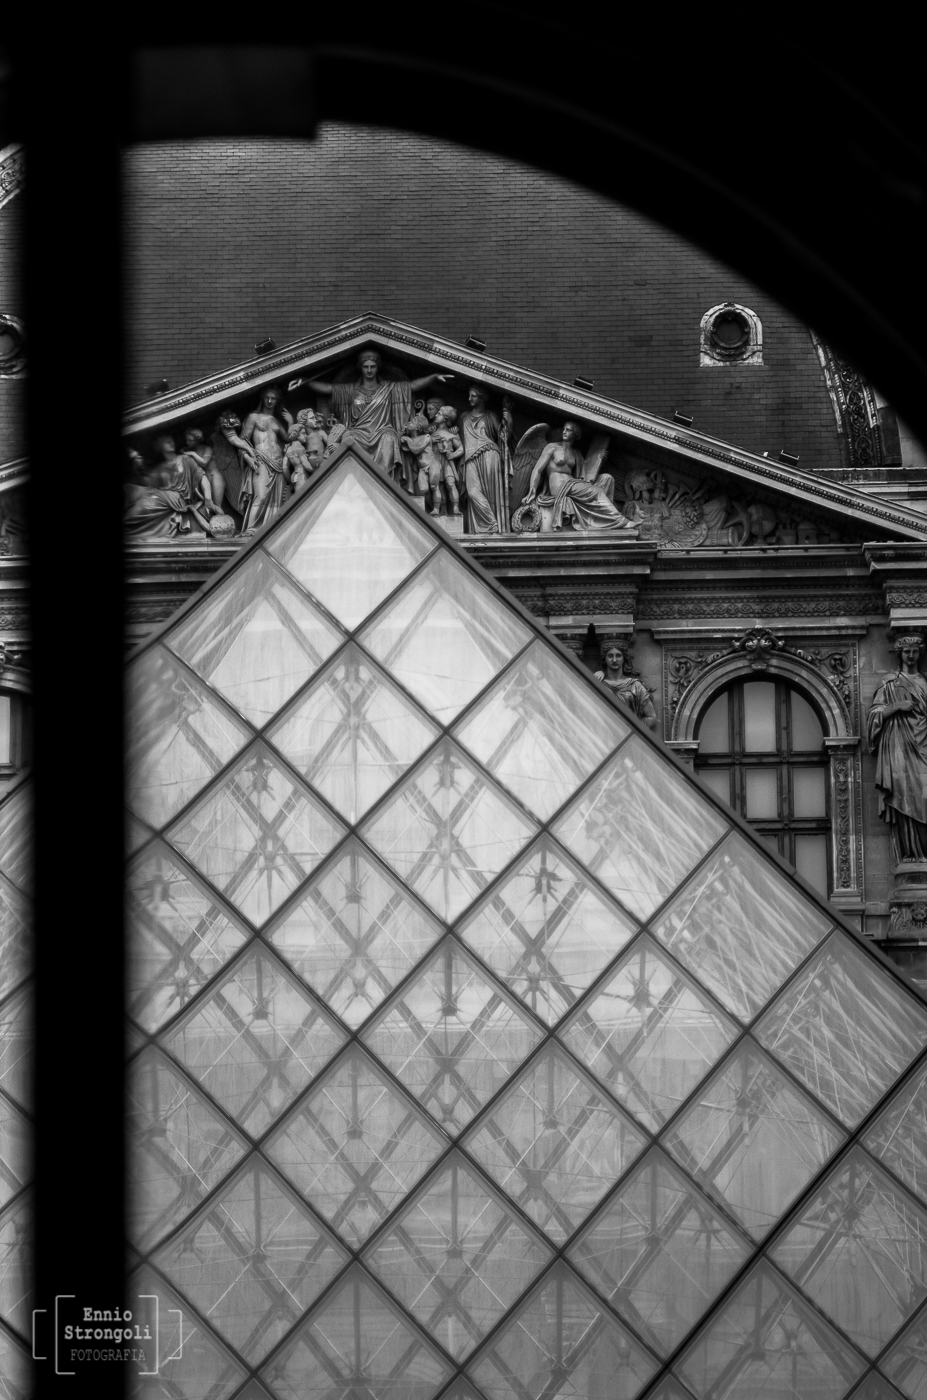 La piramide de Louvre...